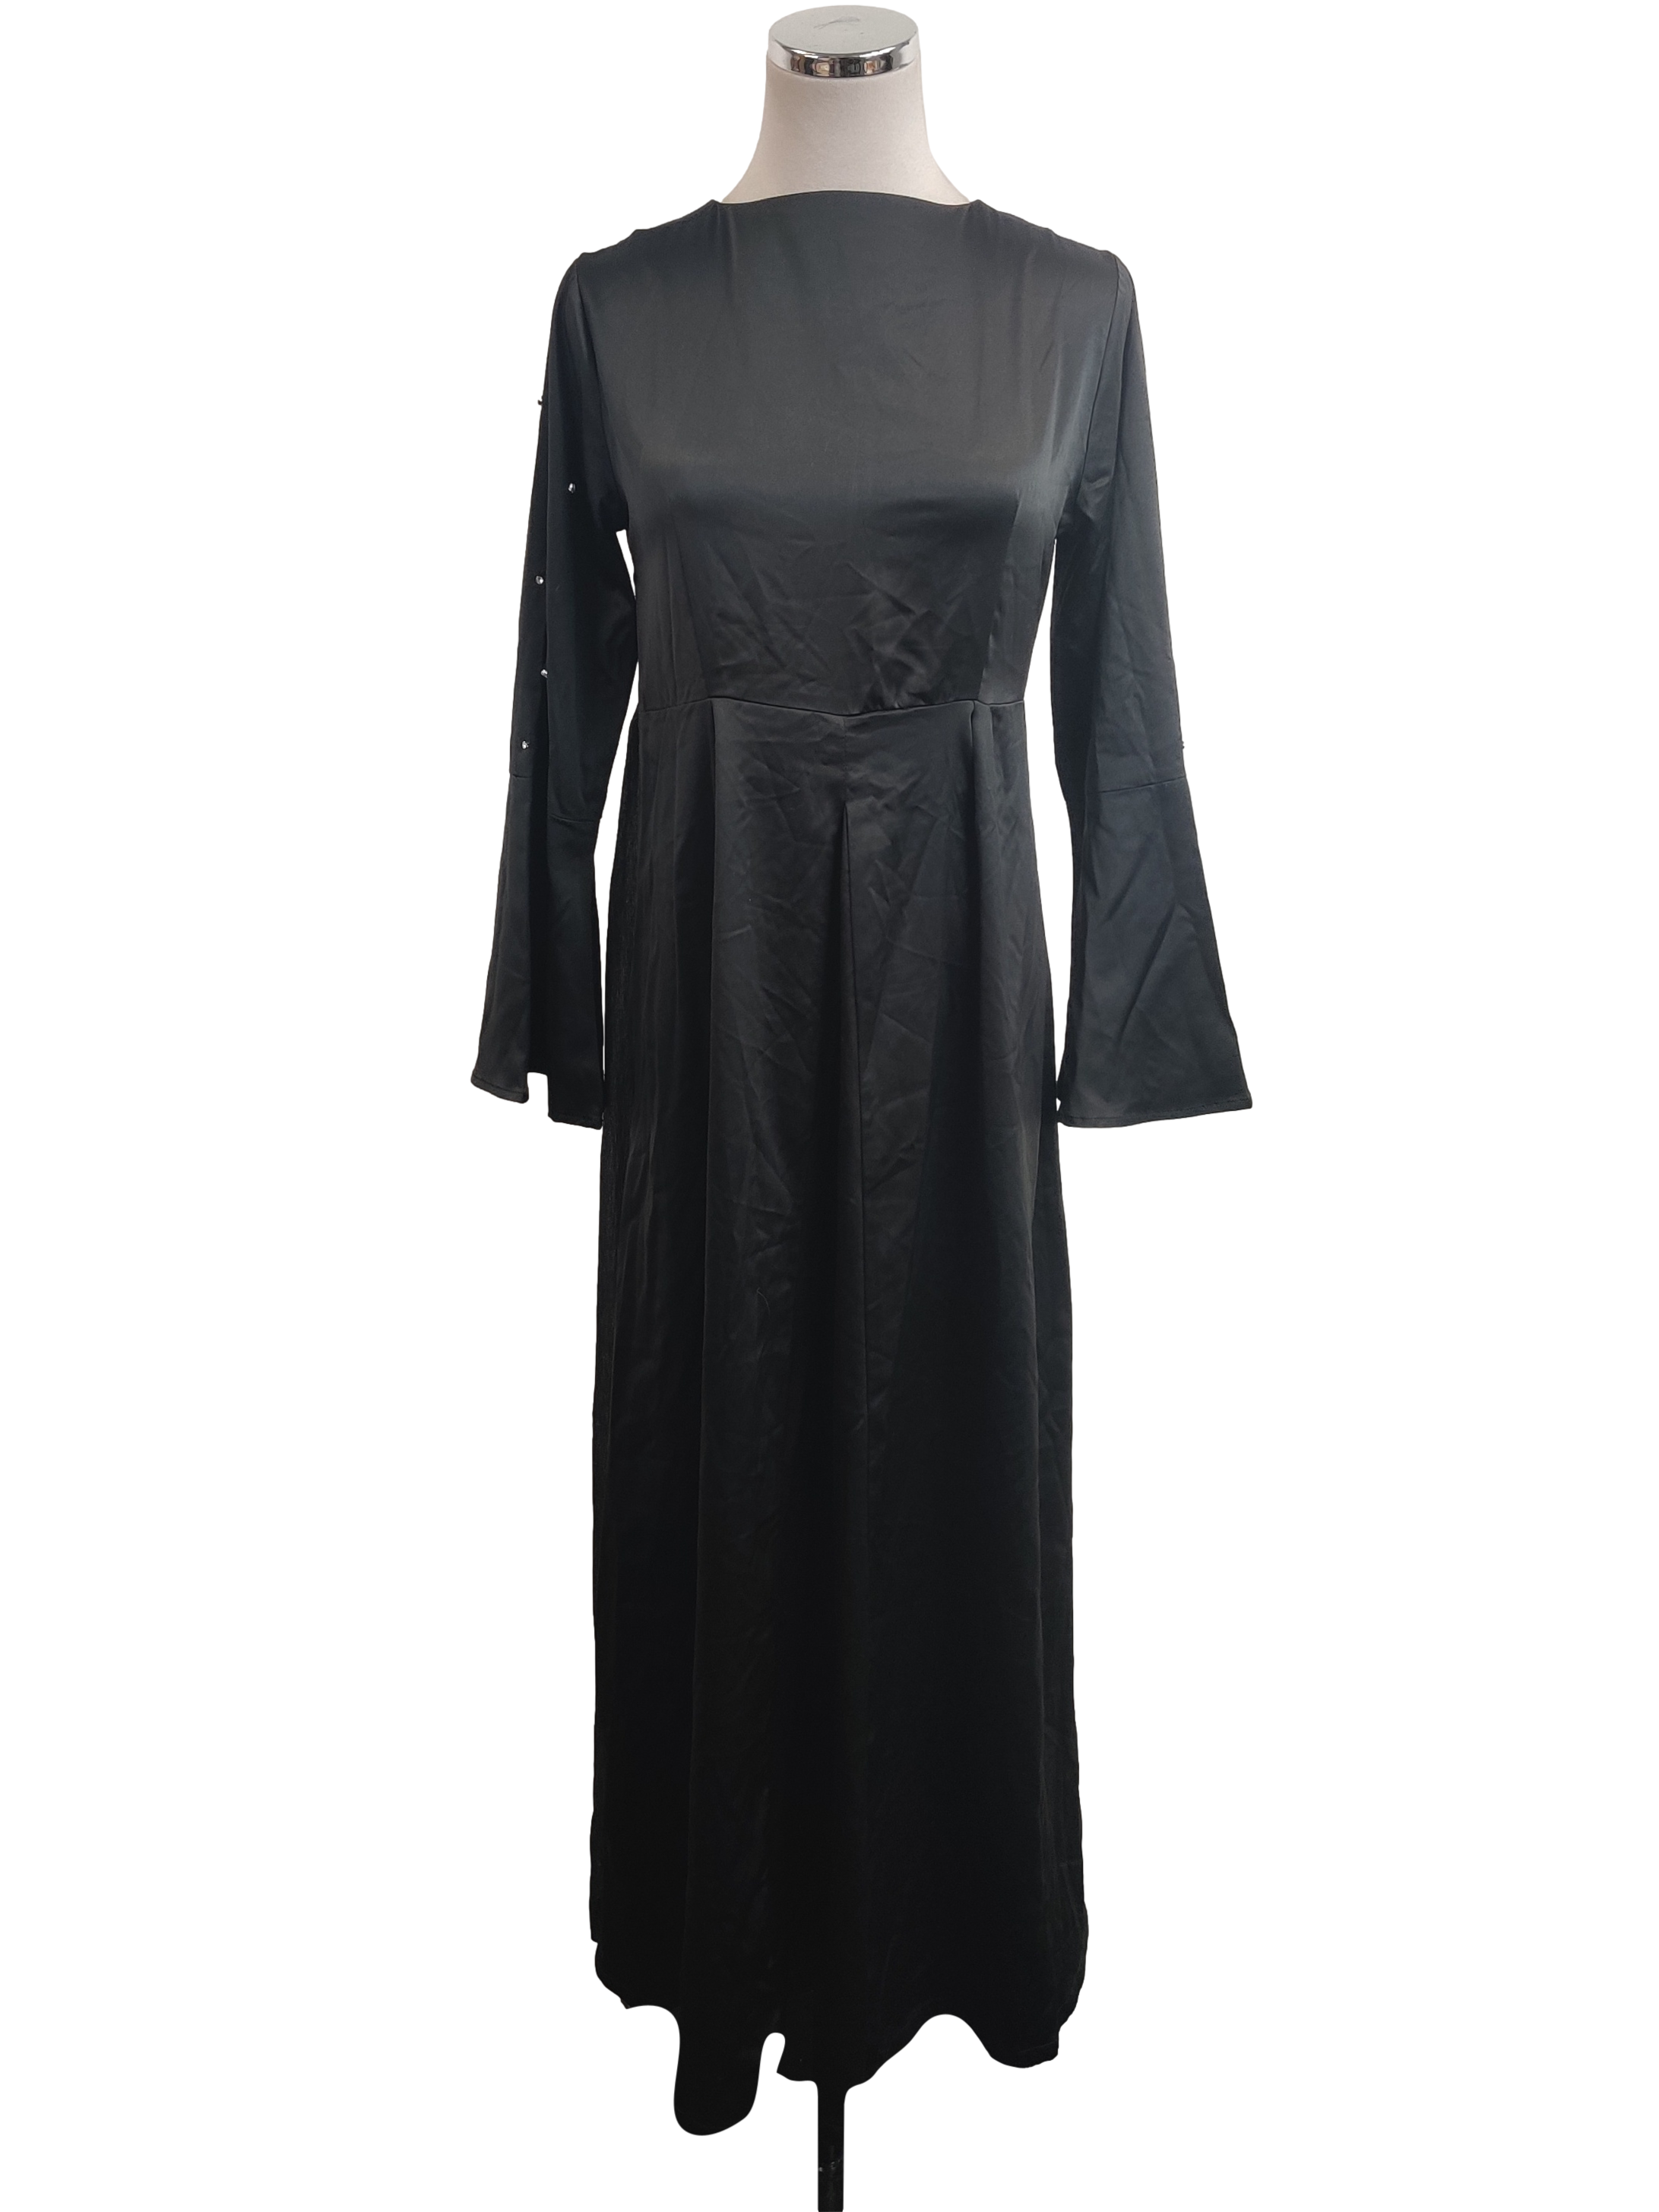 Diamond Embellished Black Dress